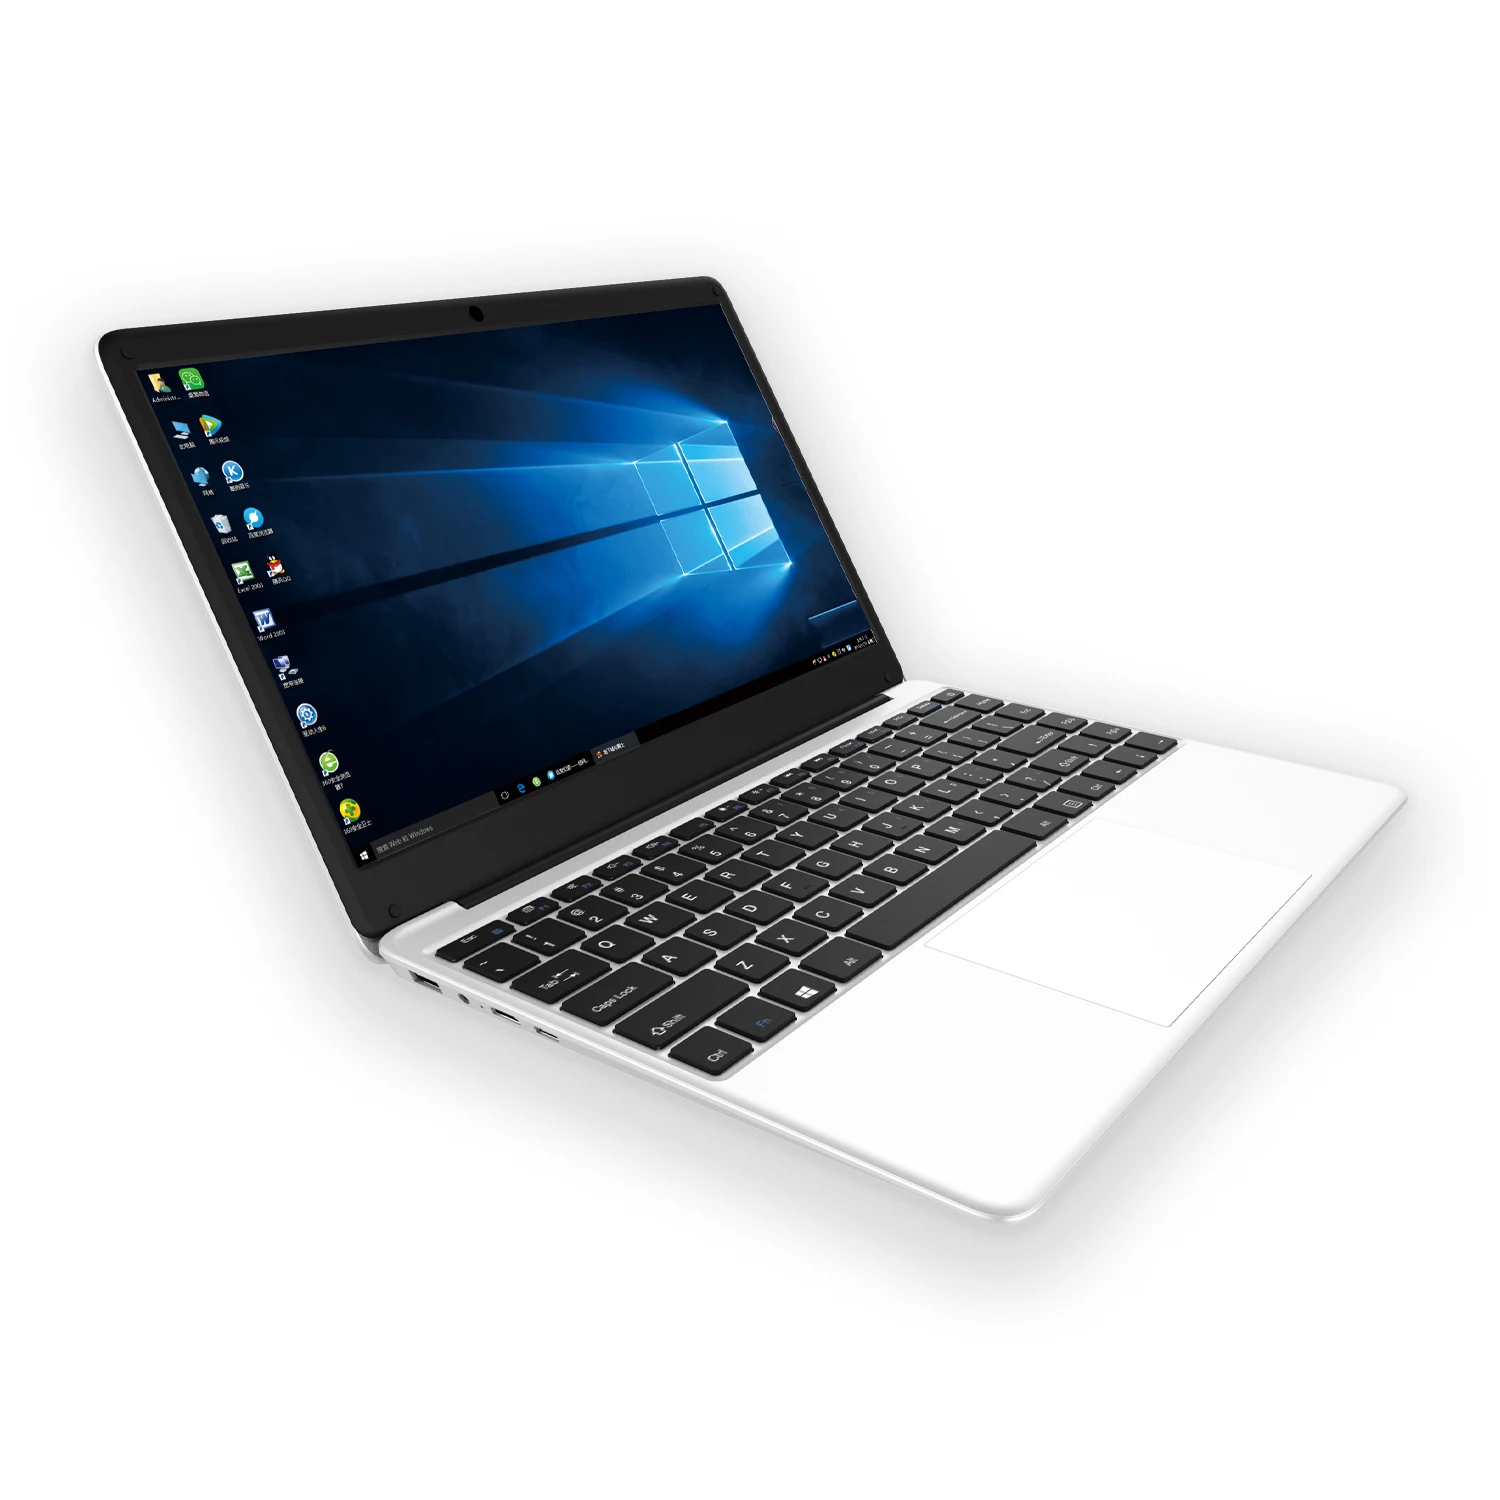 BITECH DT-X142 Laptop 14 inch 1920*1200 CPU:N4120 RAM:6GB  EMMC:64GB OS win10 cheap office game laptop